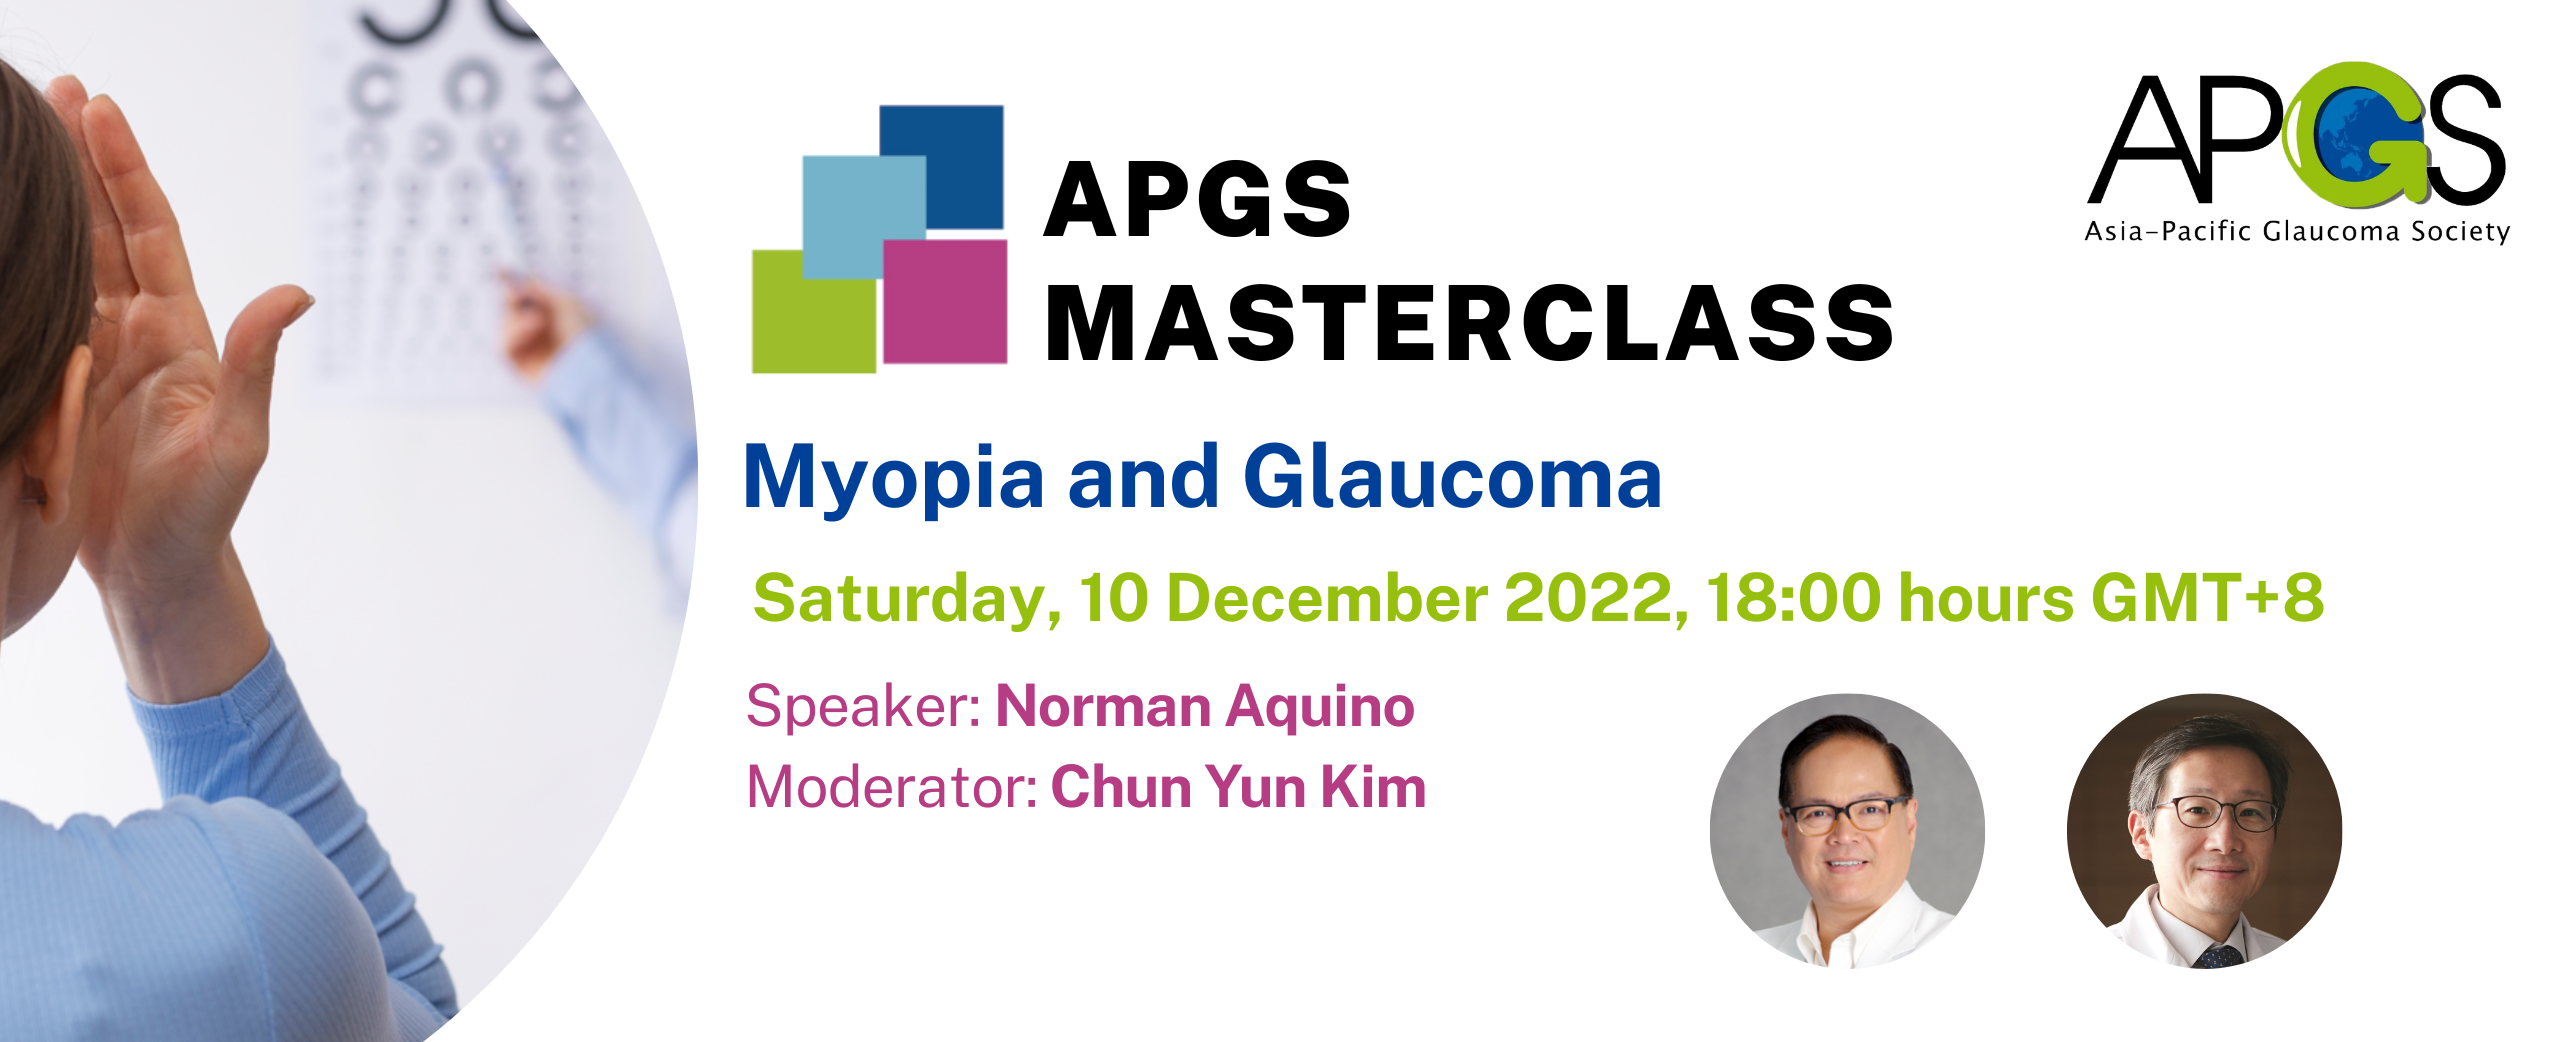 APGS MASTERCLASS 10 Dec 2022 Myopia and Glaucoma